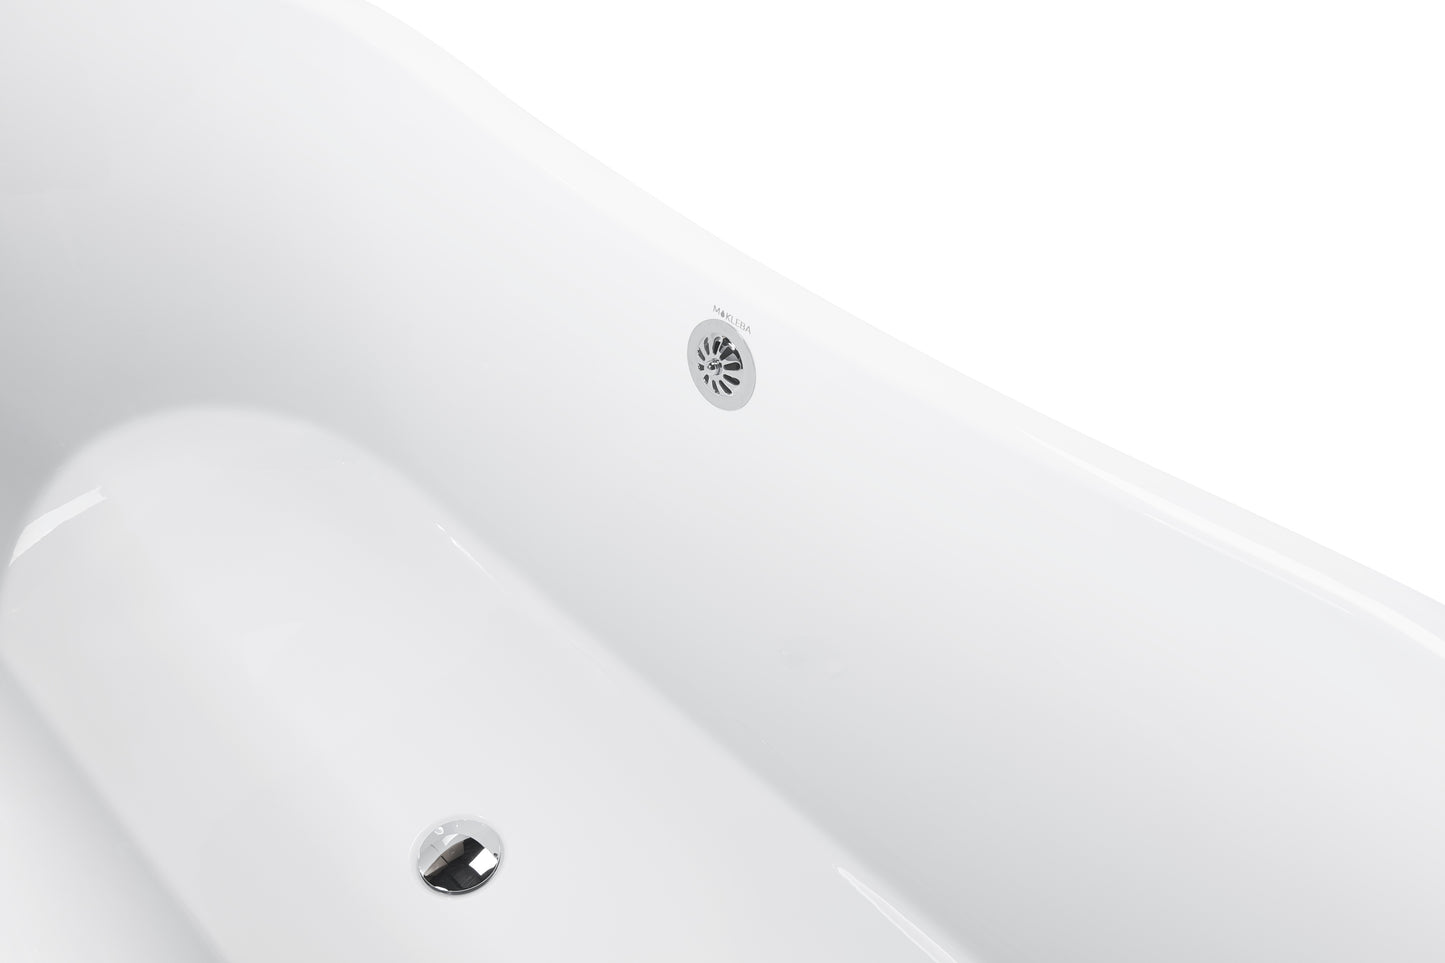 67" 100% Acrylic Freestanding Bathtub，Contemporary Soaking Tub，white bathtub